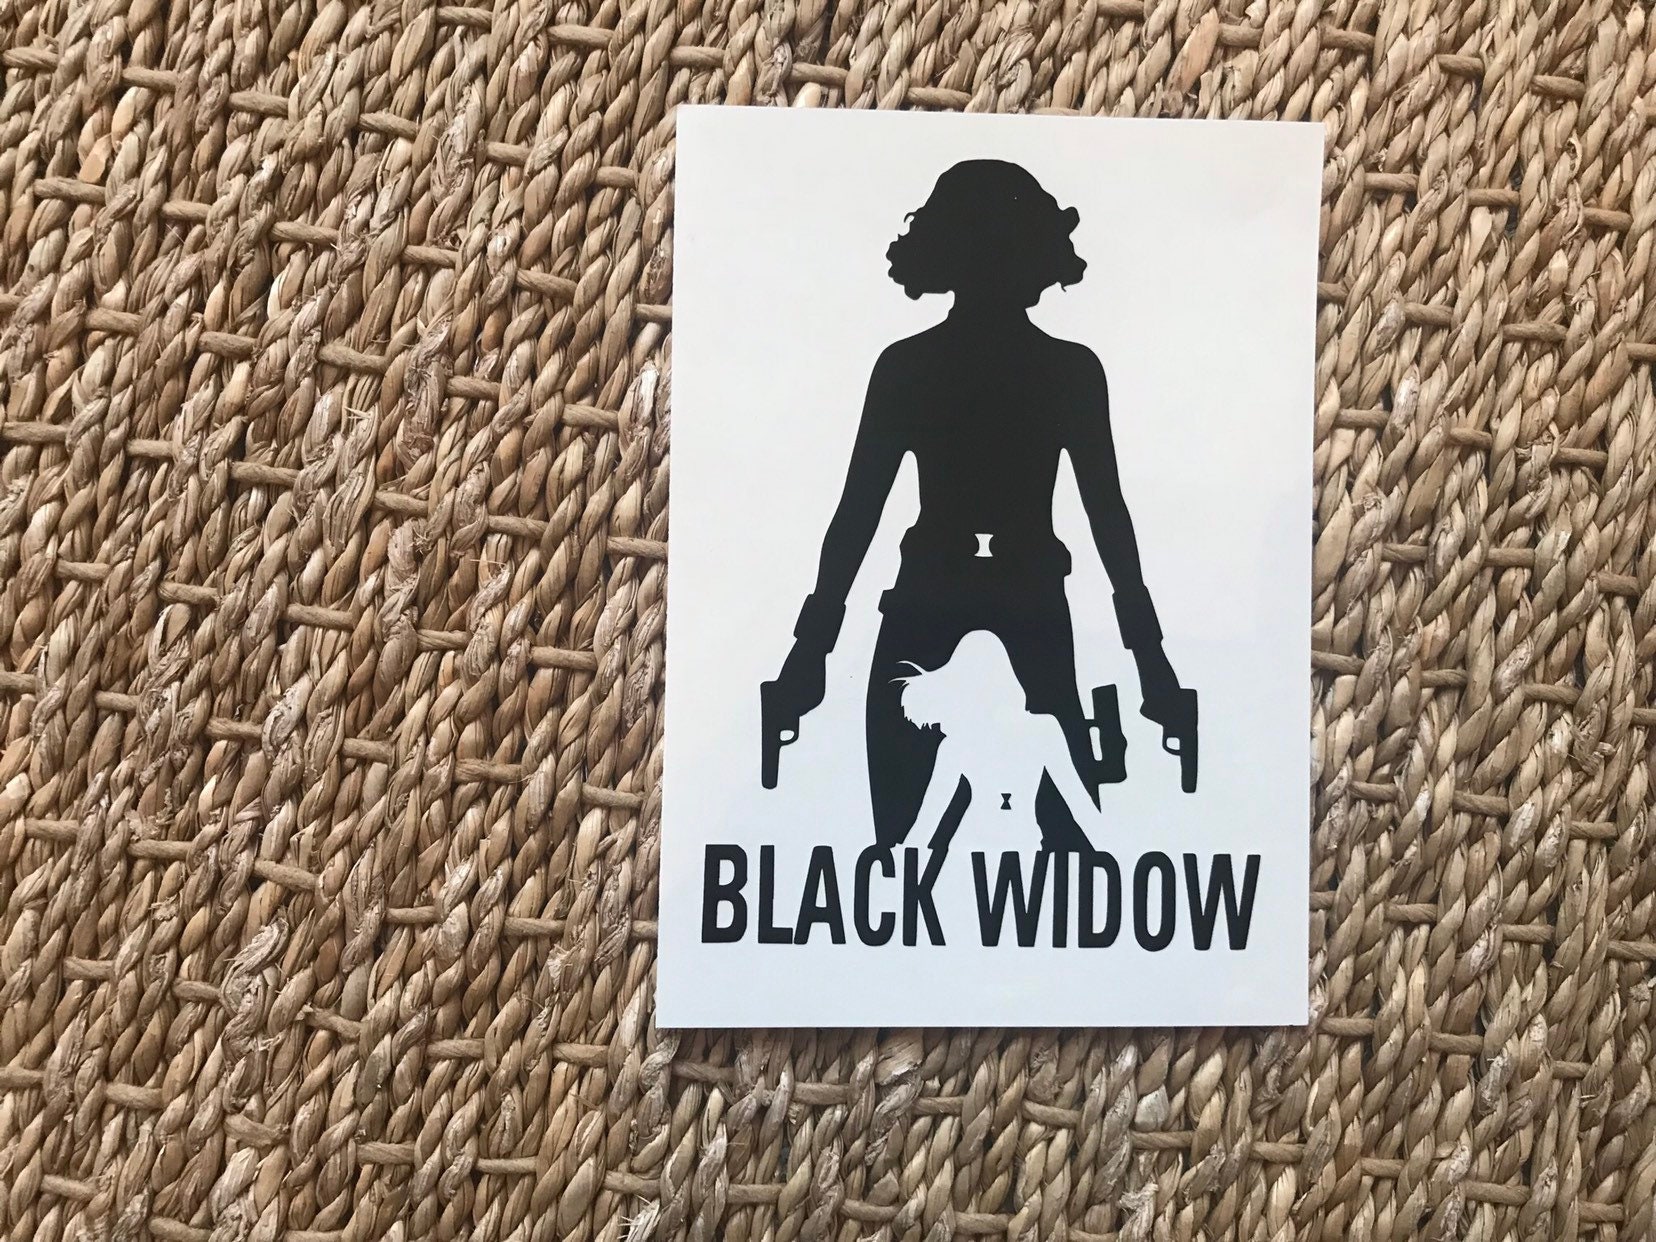 Custom Vinyl Superhero Black Widow Decal Personalized Etsy